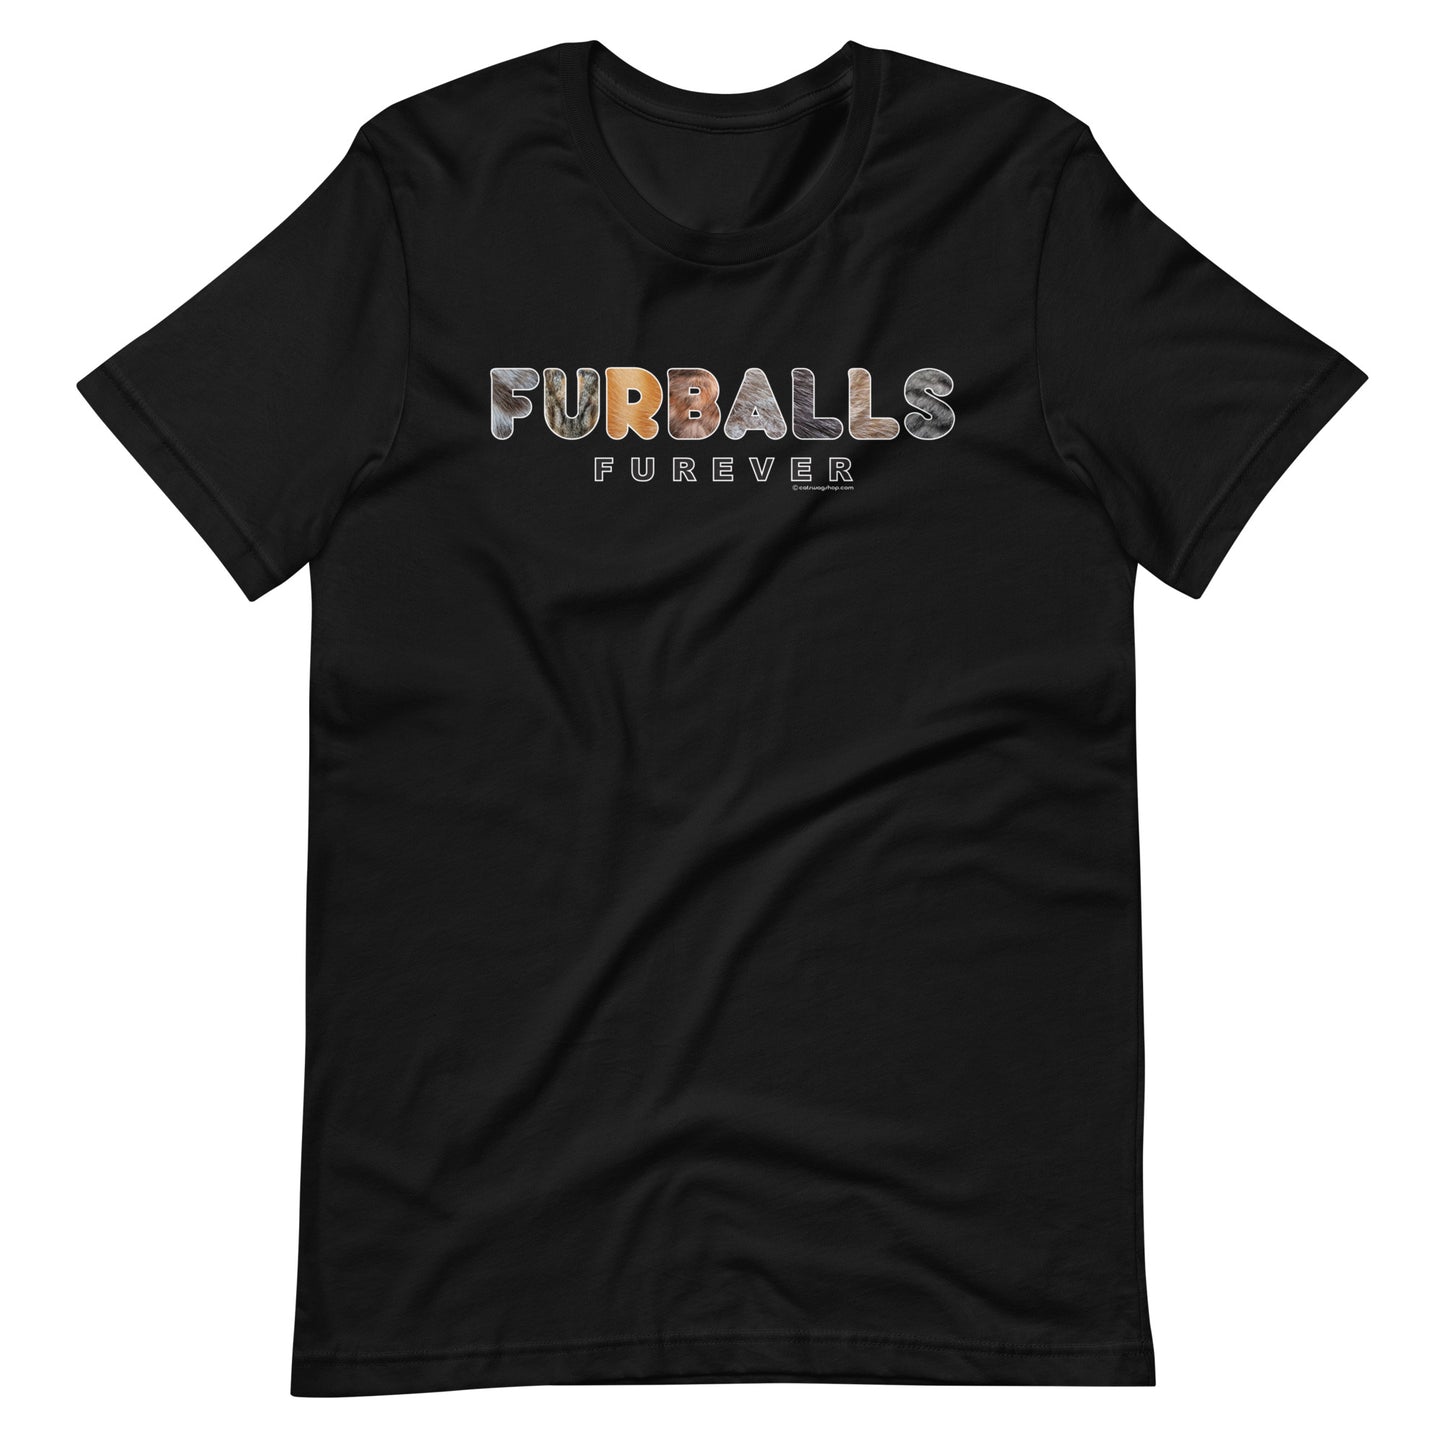 Furballs Furever - Unisex t-shirt